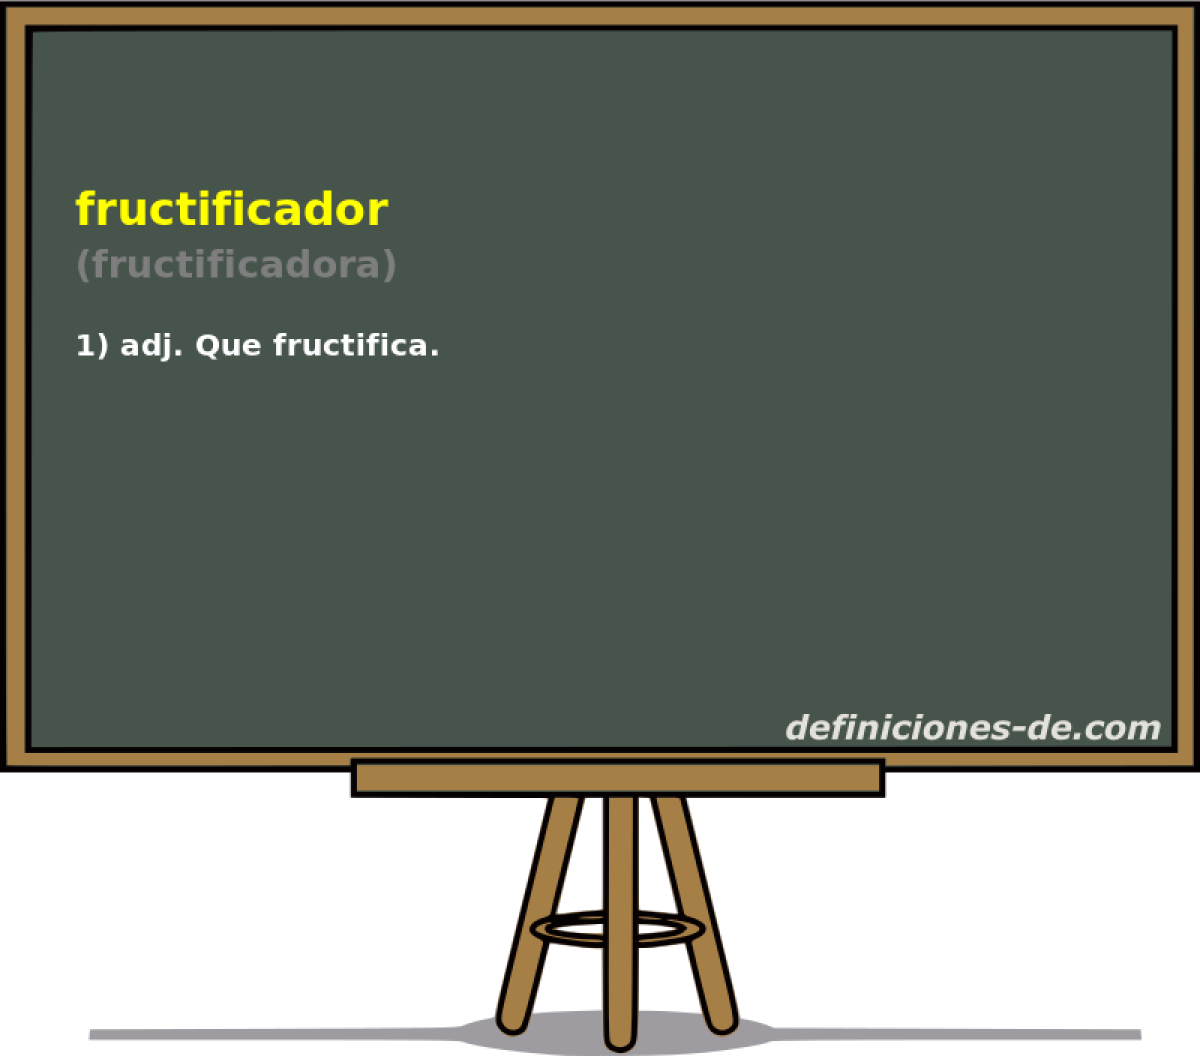 fructificador (fructificadora)